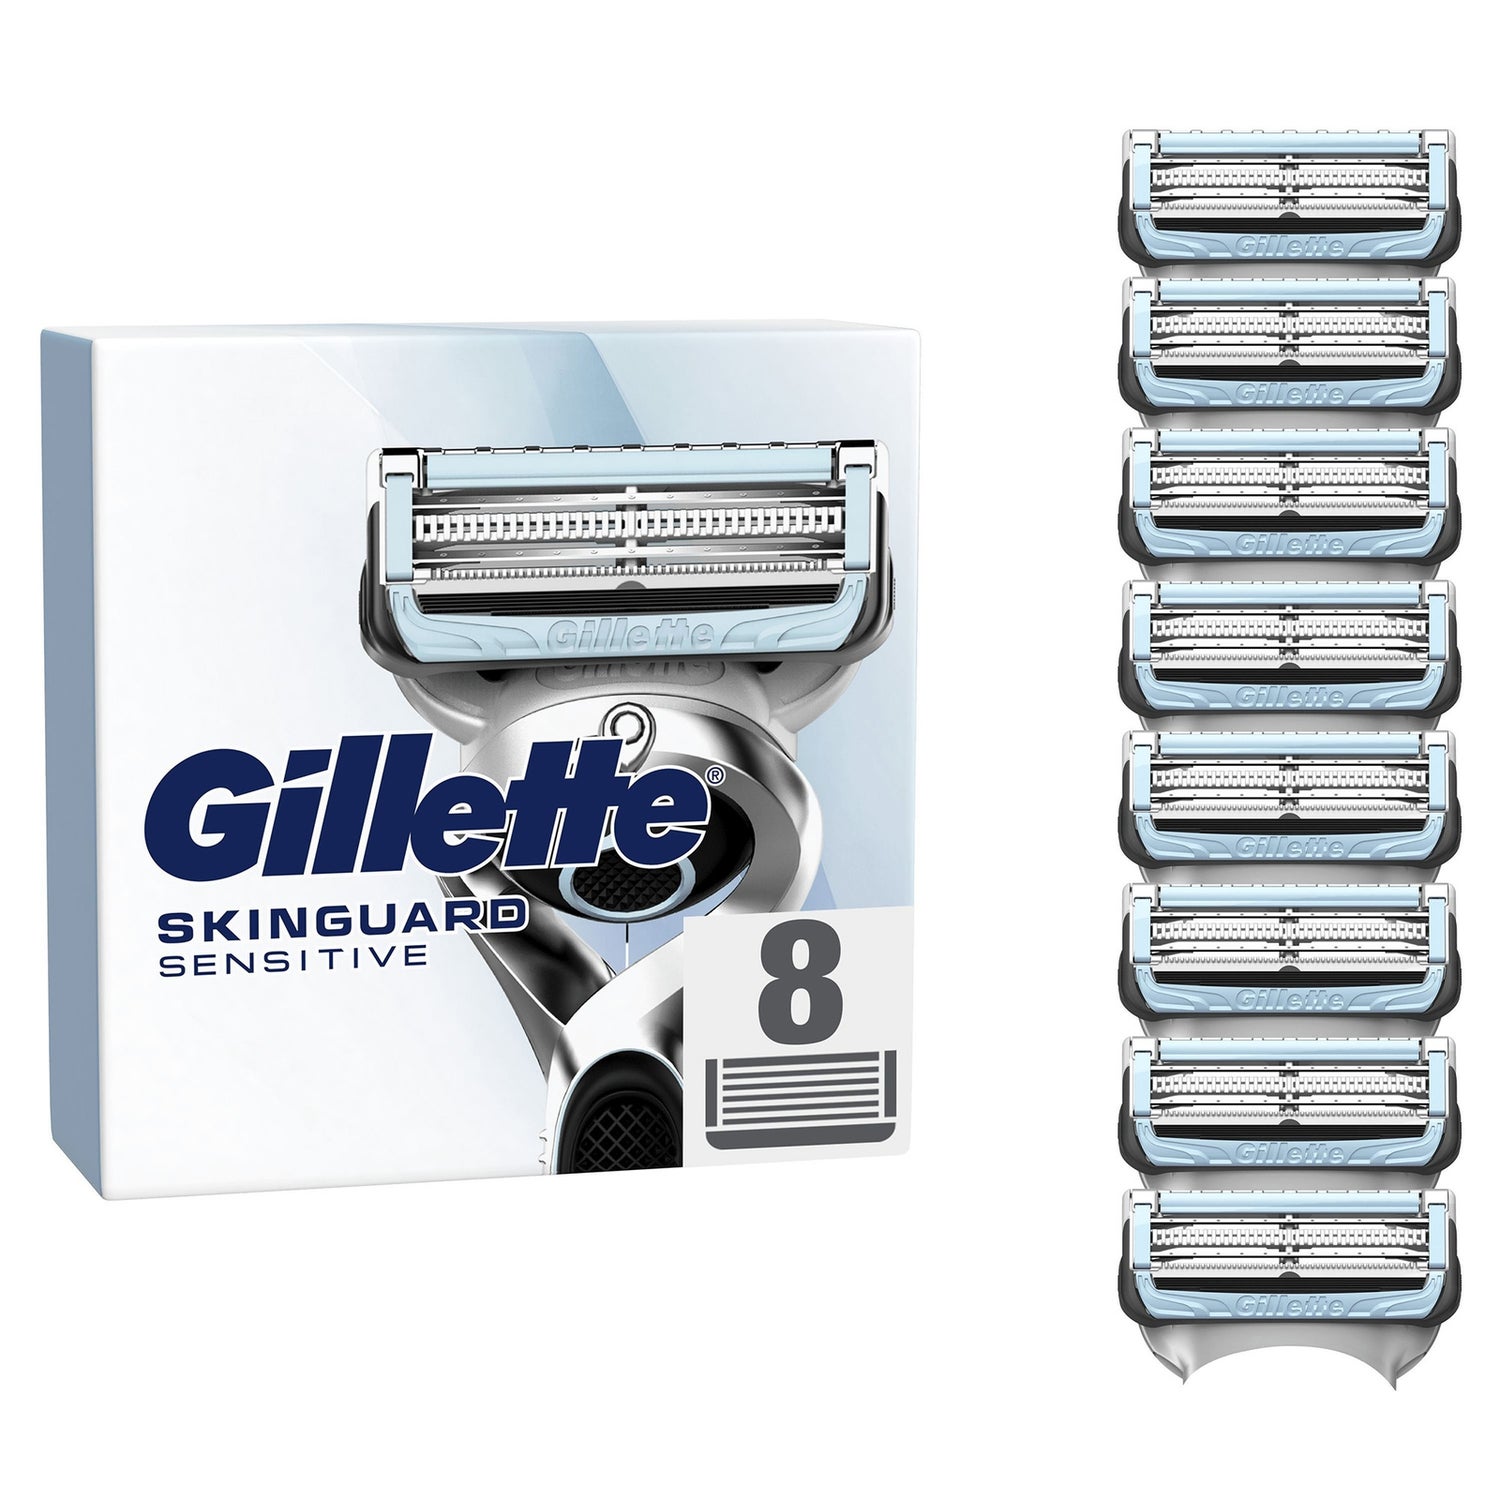 Gillette SkinGuard Sensitive Razor Blades